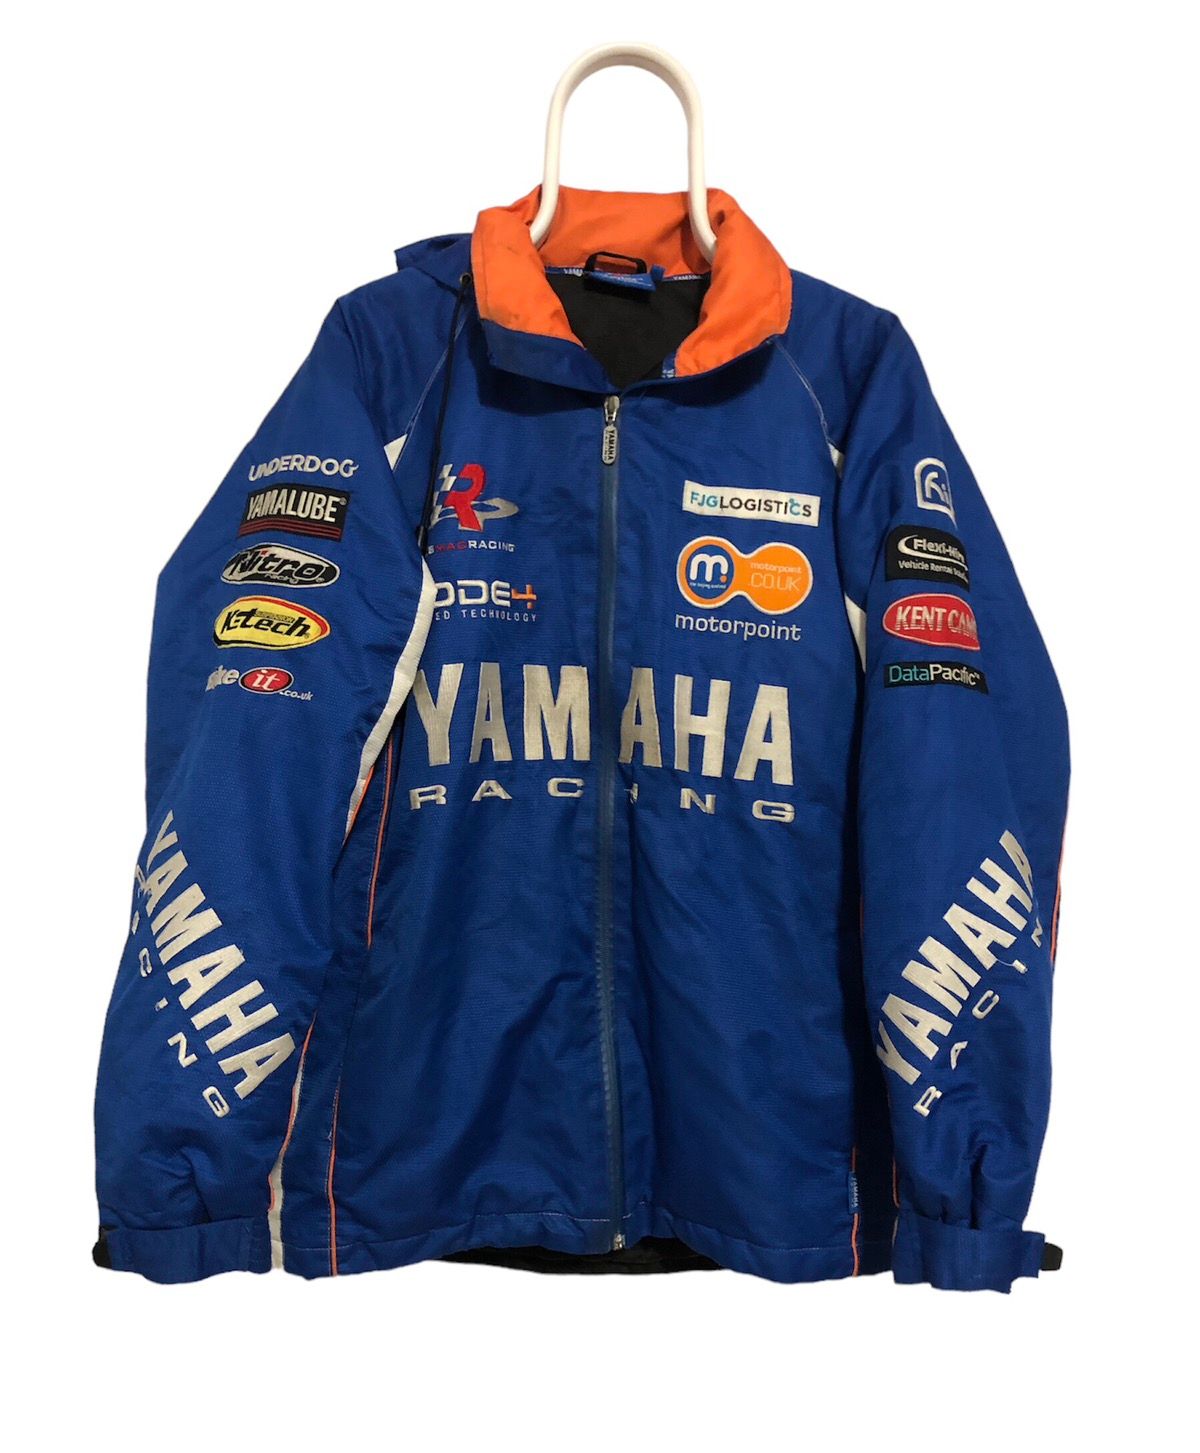 Vintage Vintage yamaha Racing jacket blue | Grailed